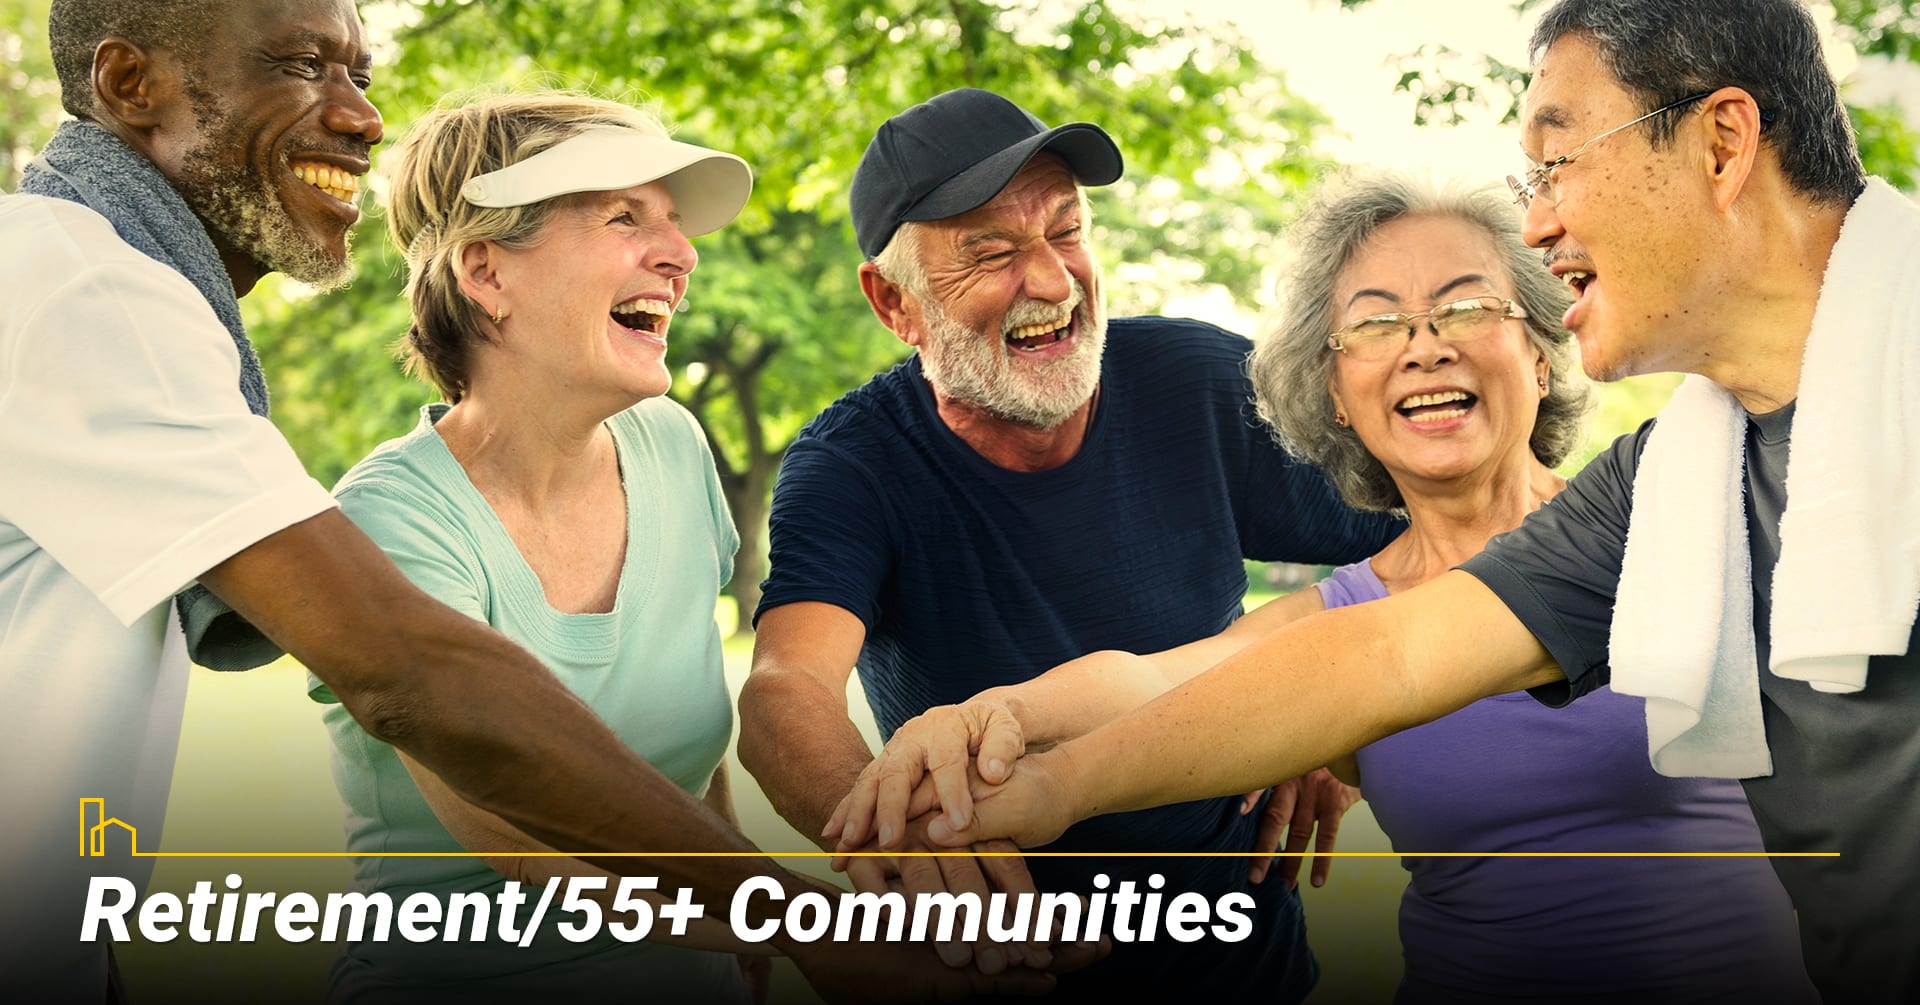 Retirement/55+ Communities, senior communities